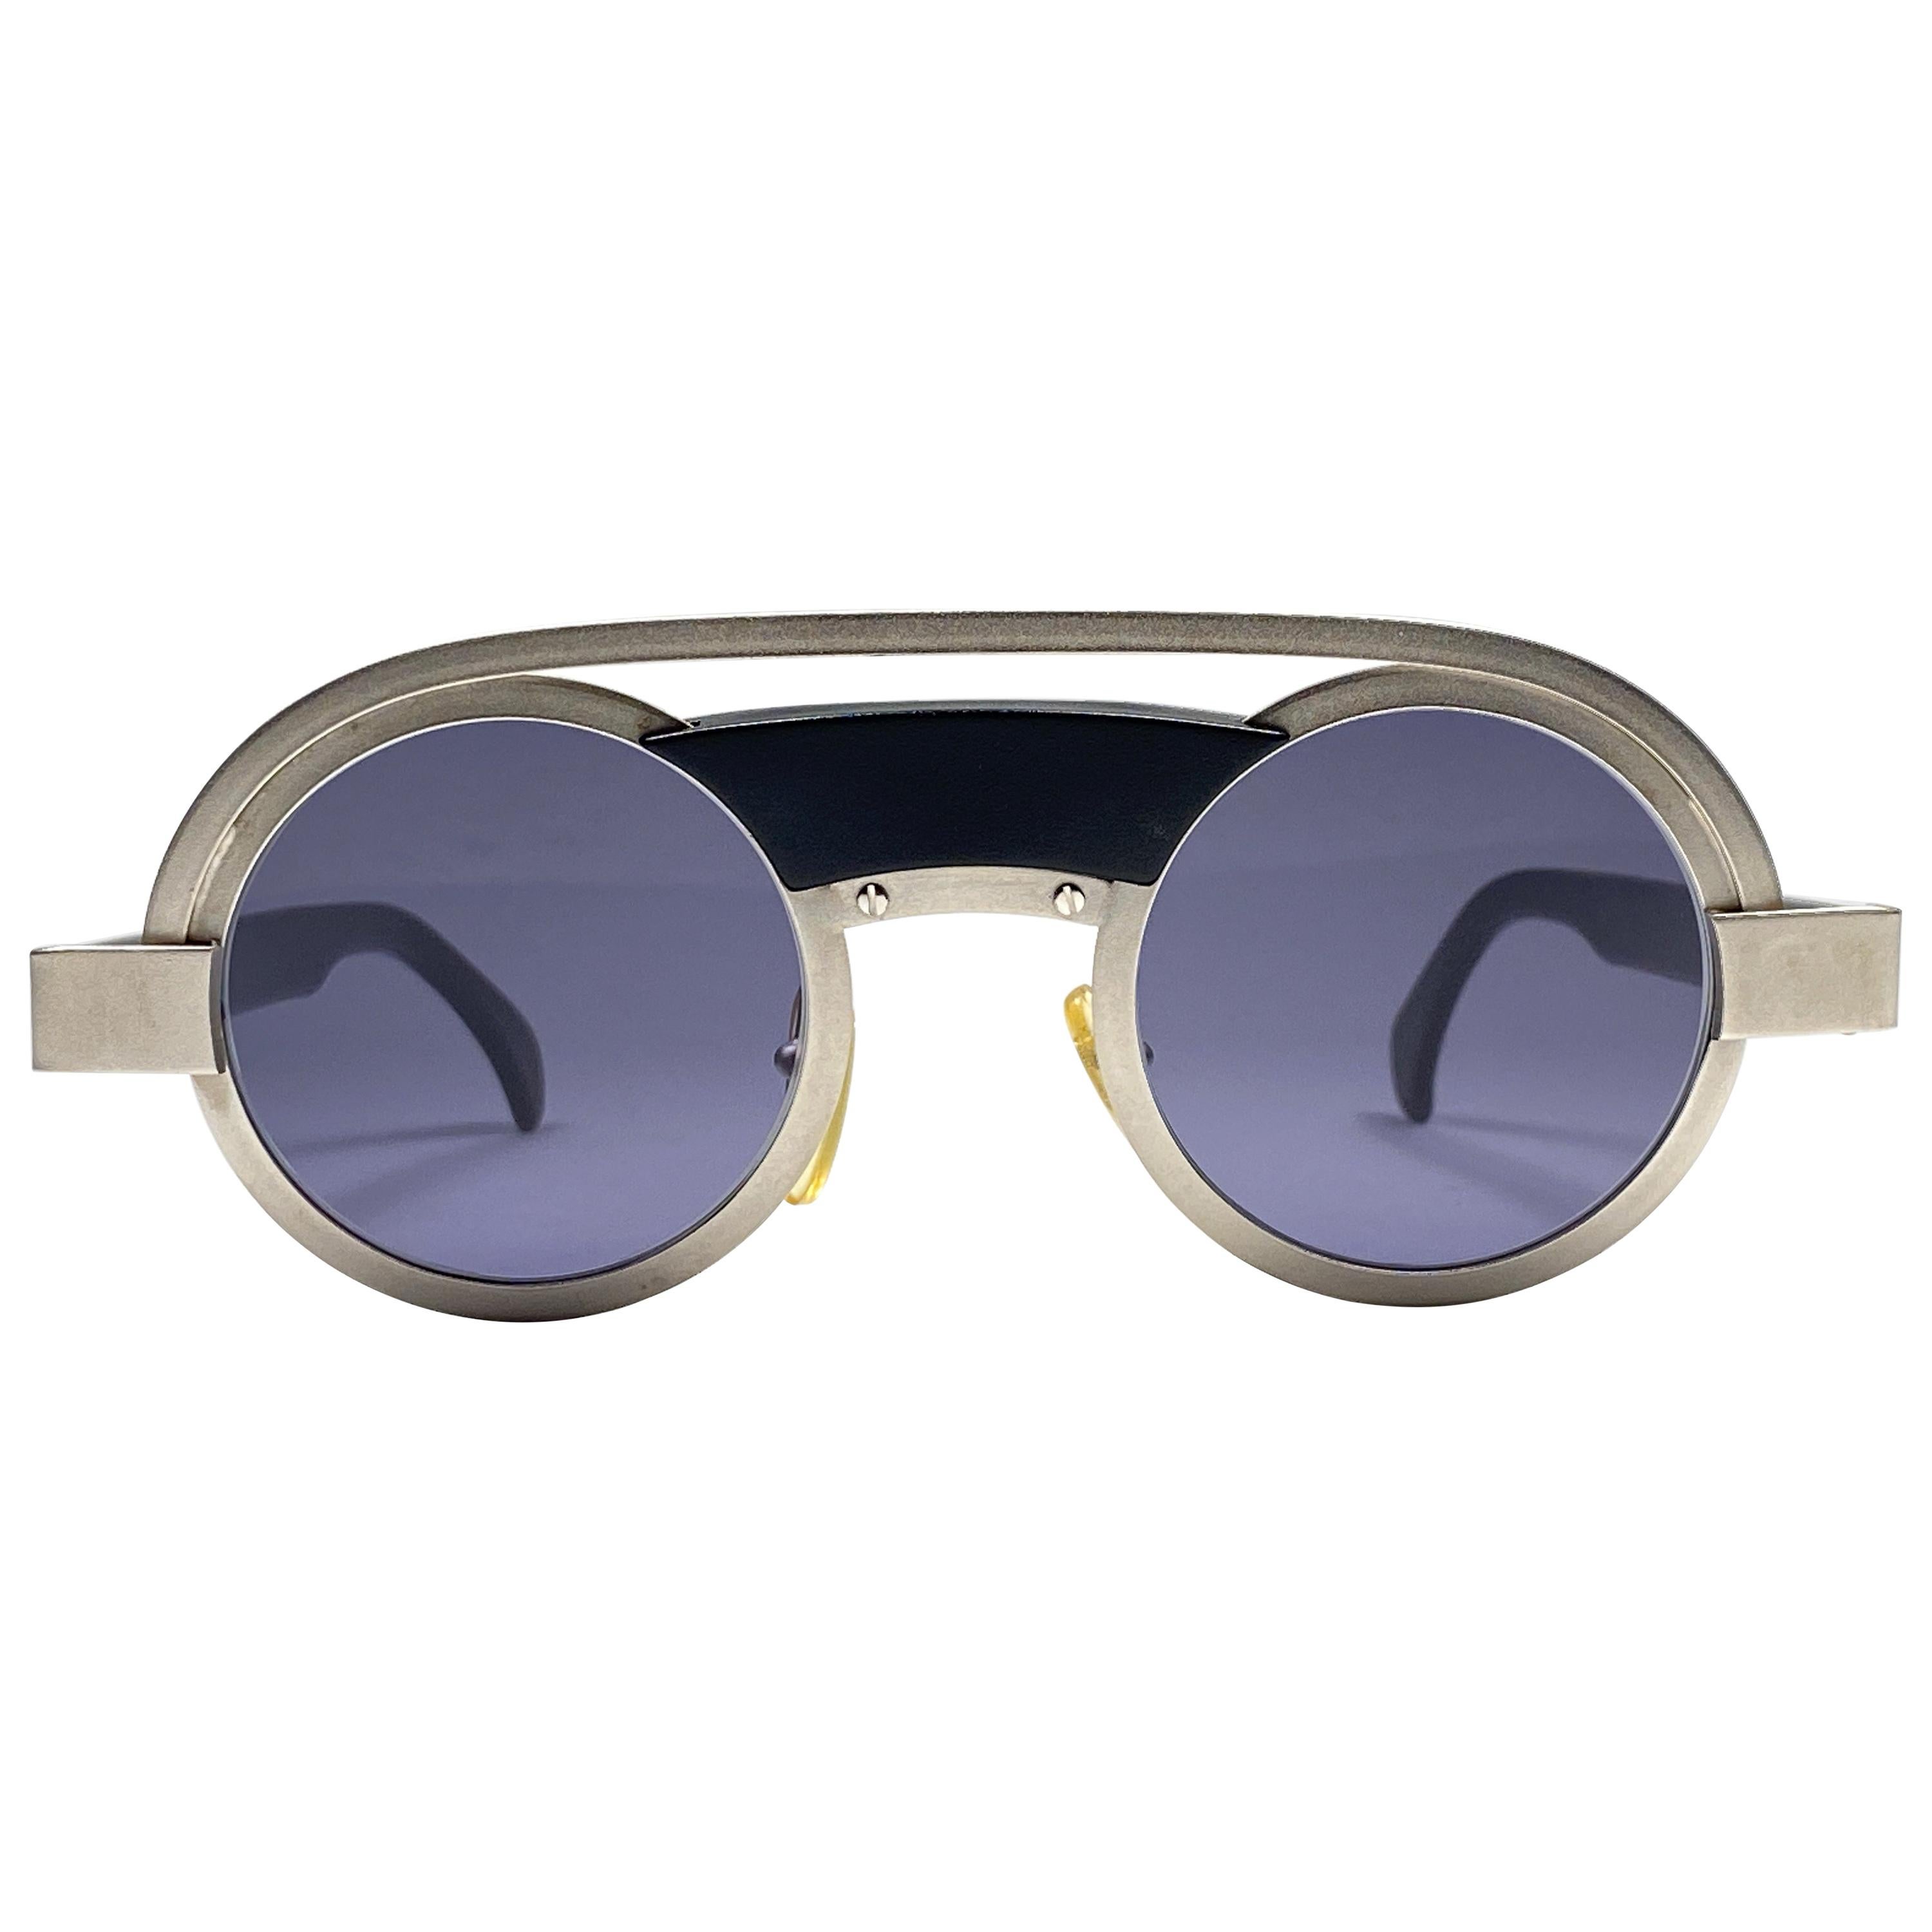 New Vintage Rare Alain Mikli 639 Black Round Aluminium France Sunglasses 1980